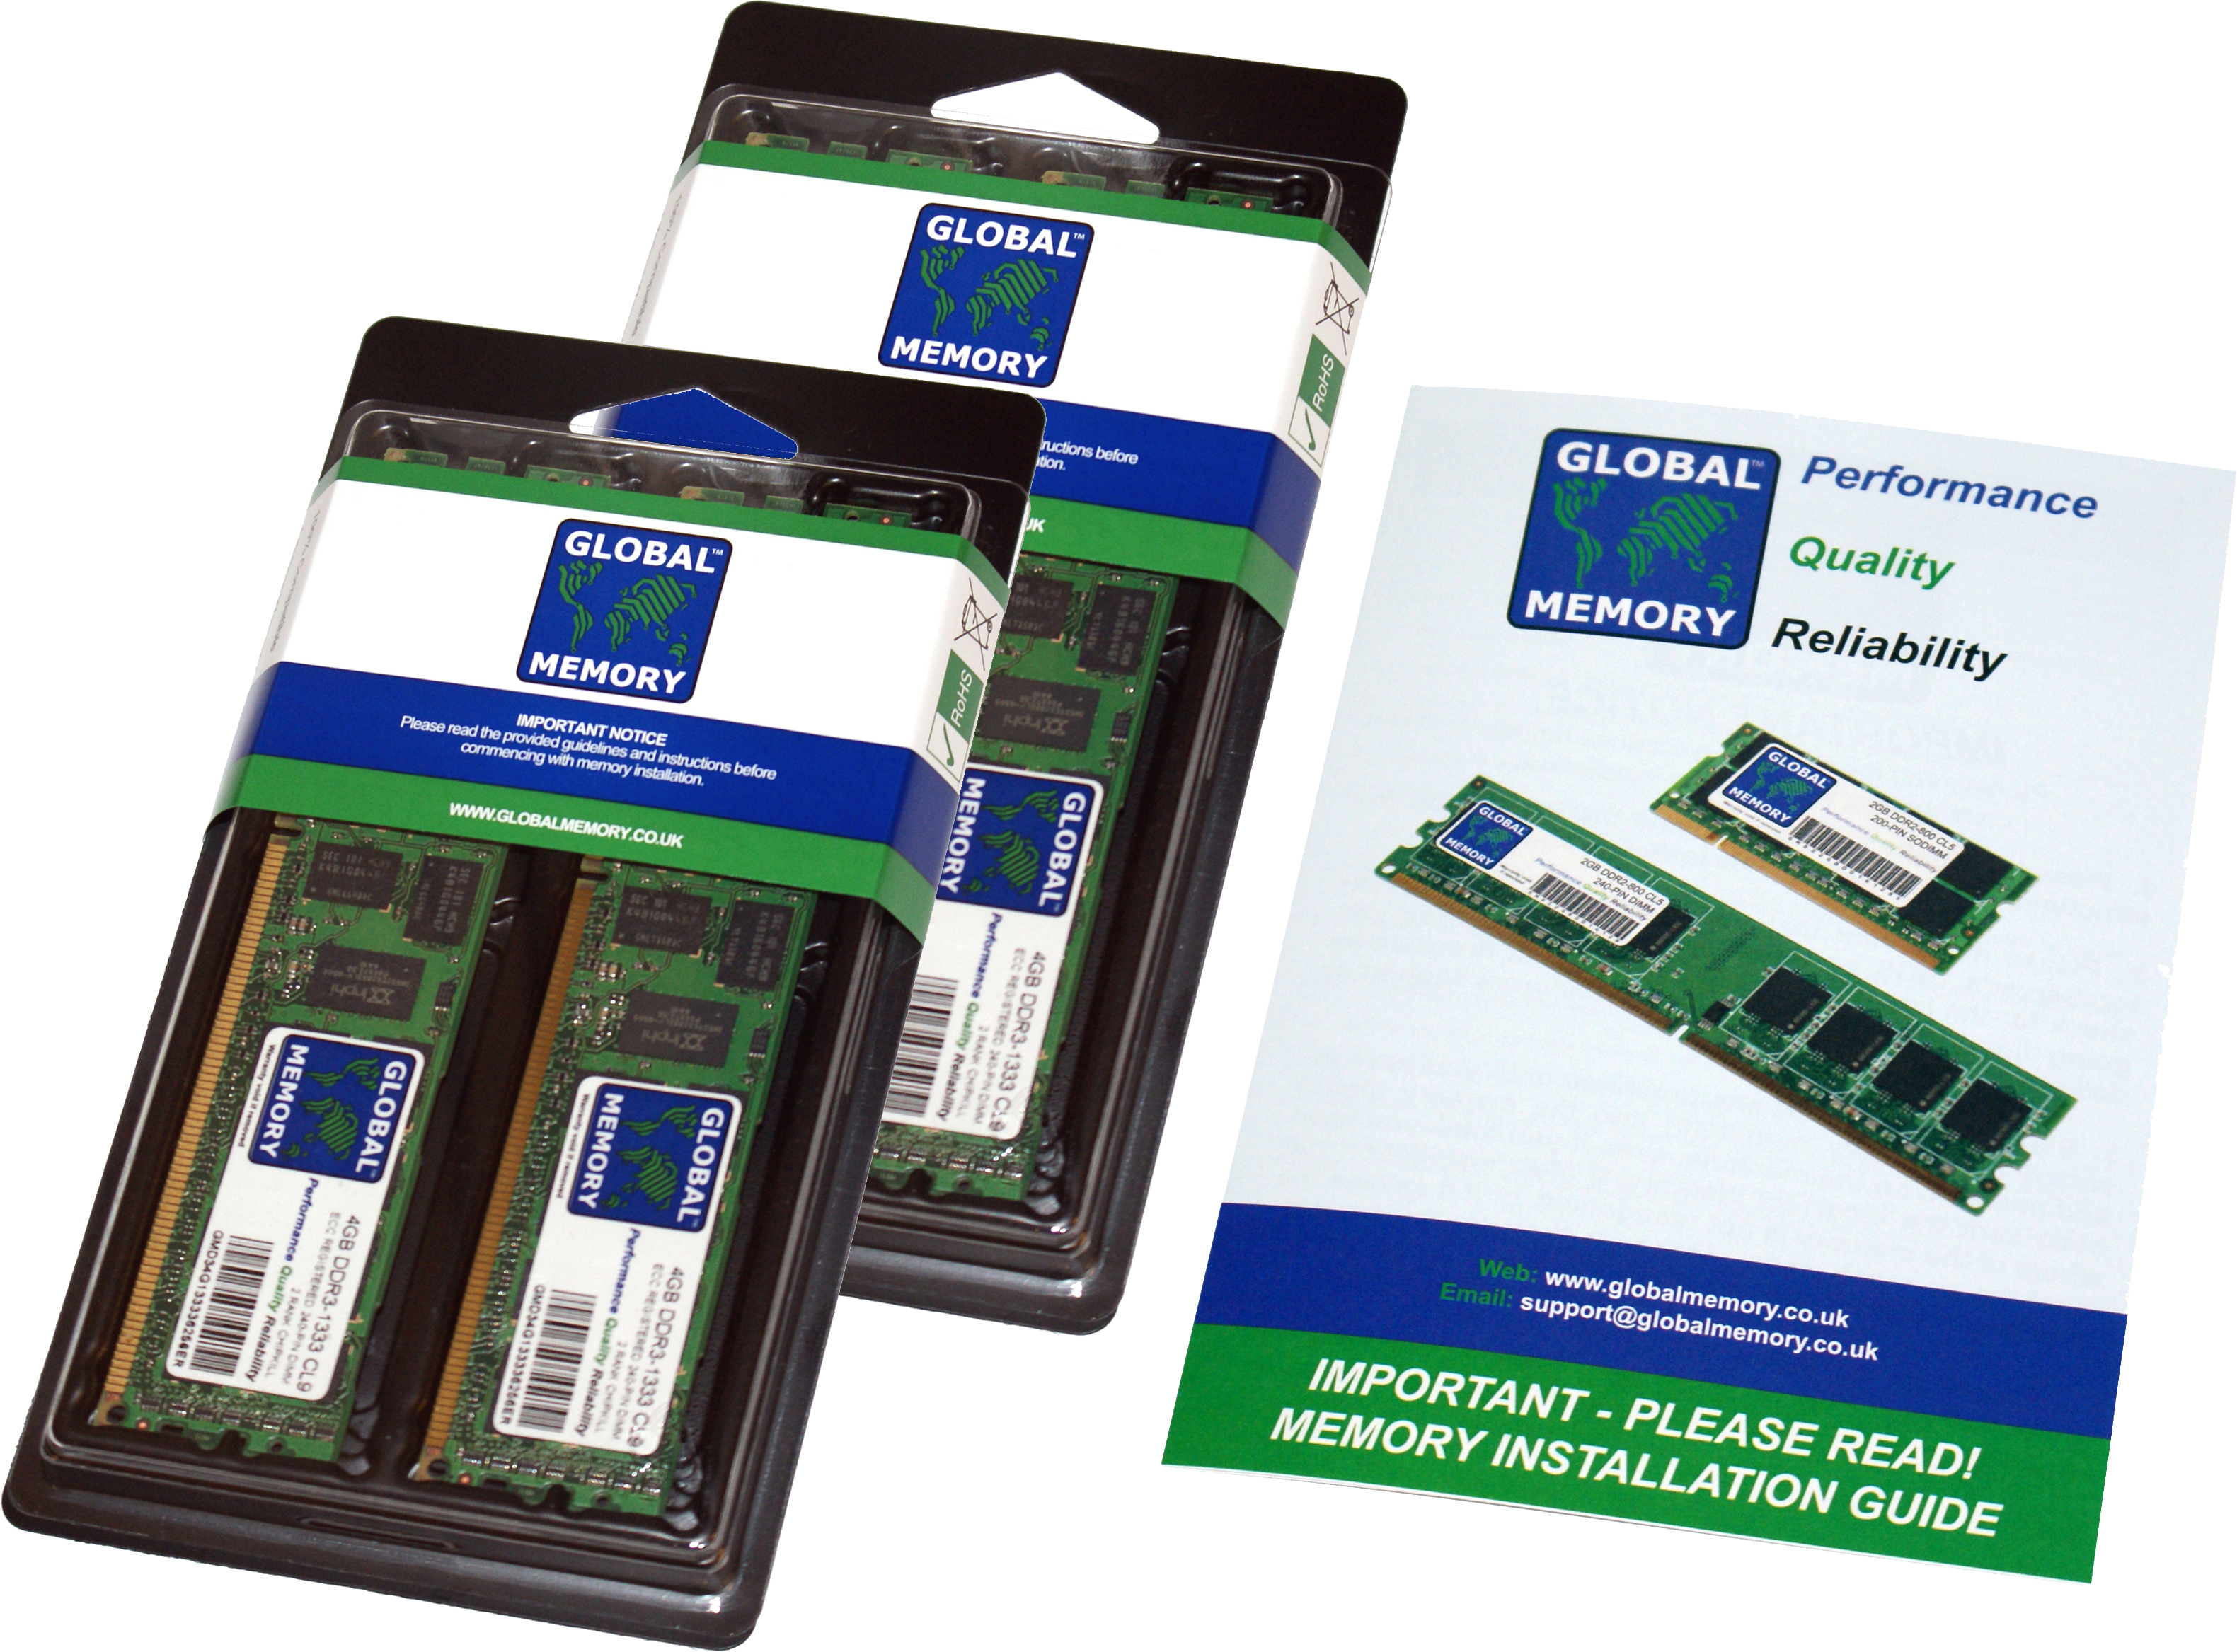 64GB (4 x 16GB) DDR4 2400MHz PC4-19200 288-PIN ECC REGISTERED DIMM (RDIMM) MEMORY RAM KIT FOR DELL SERVERS/WORKSTATIONS (8 RANK KIT CHIPKILL)